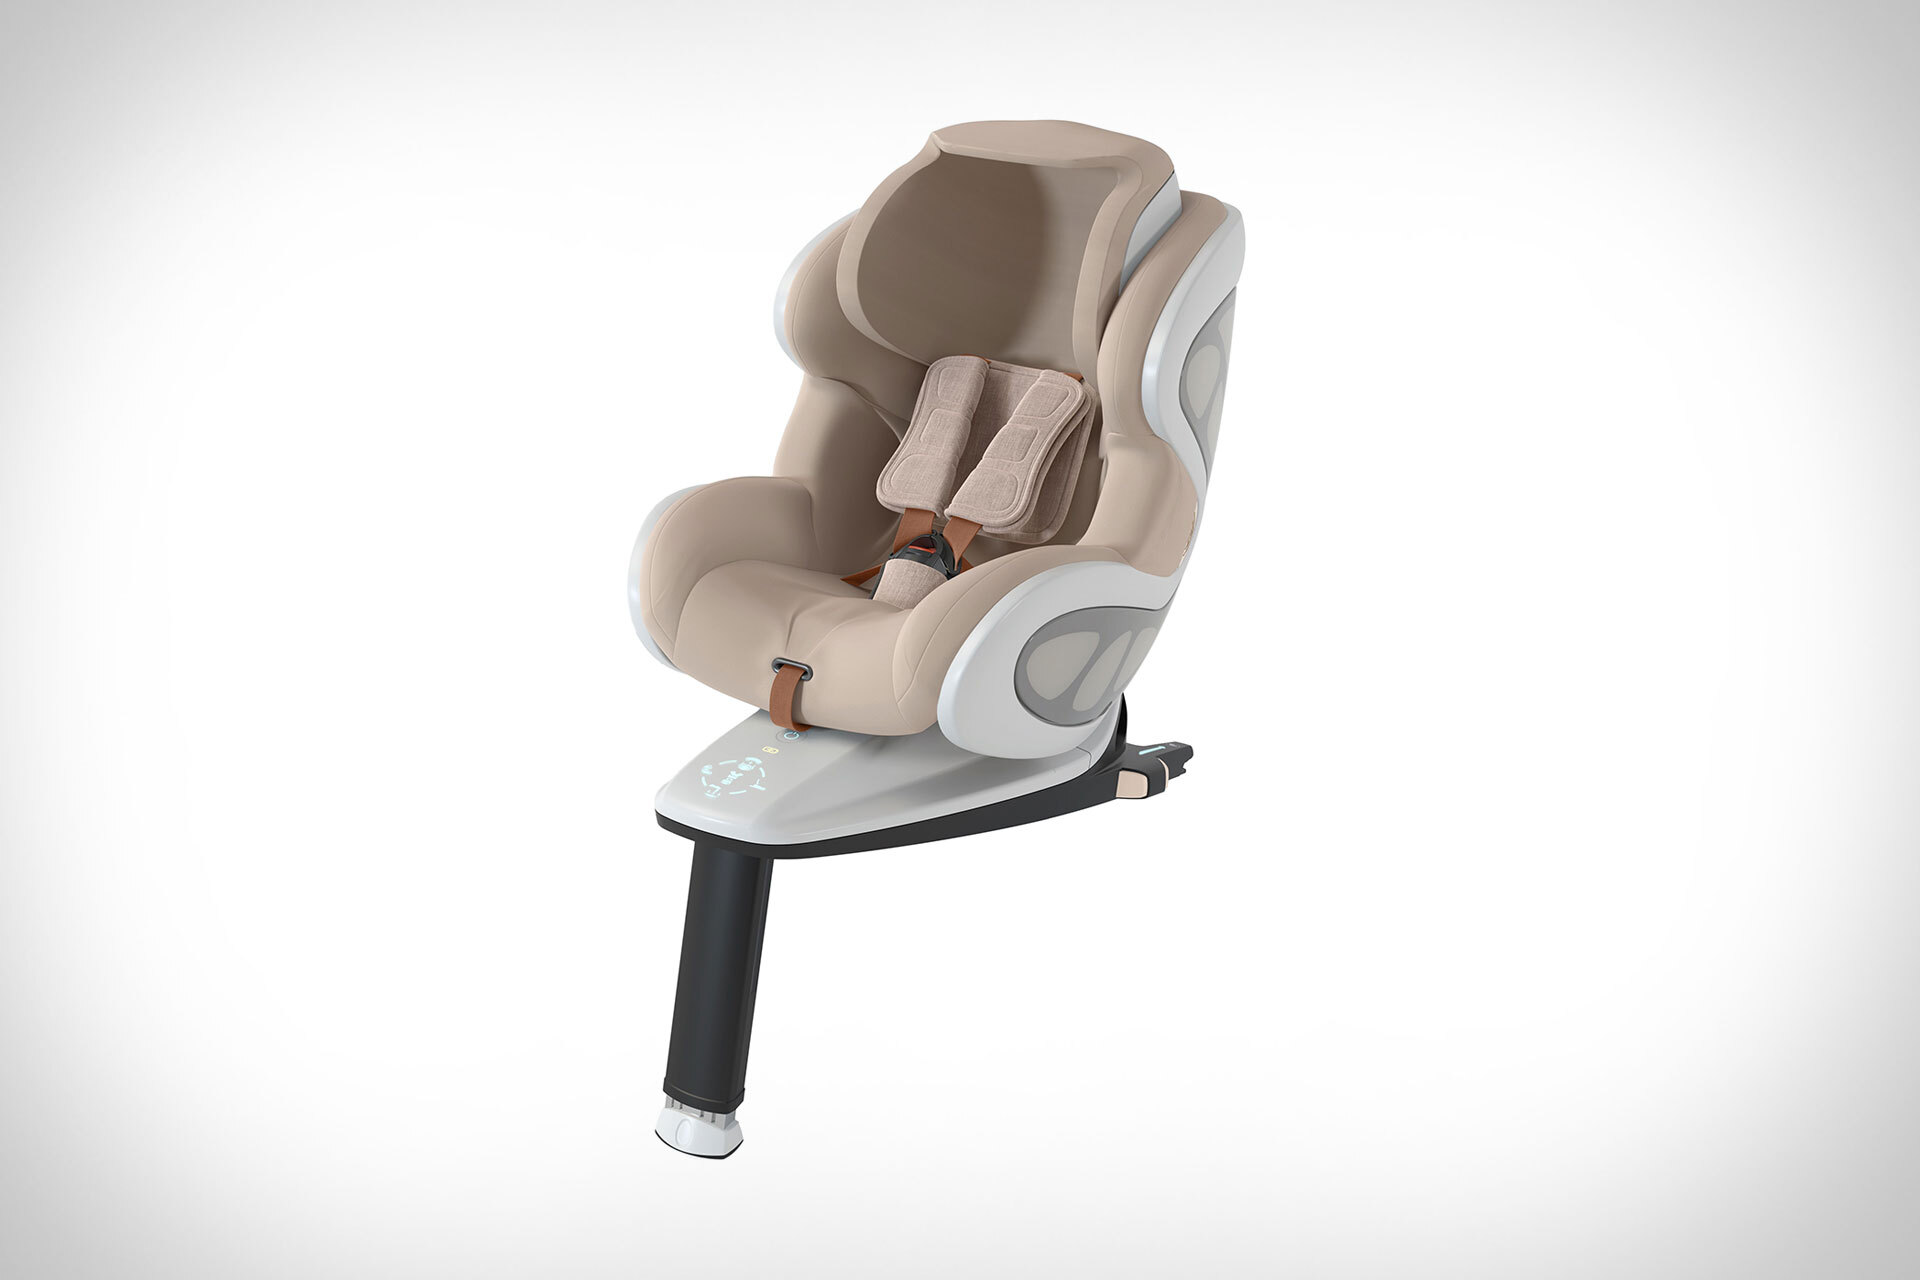 BabyArk Child Car Seat Uncrate